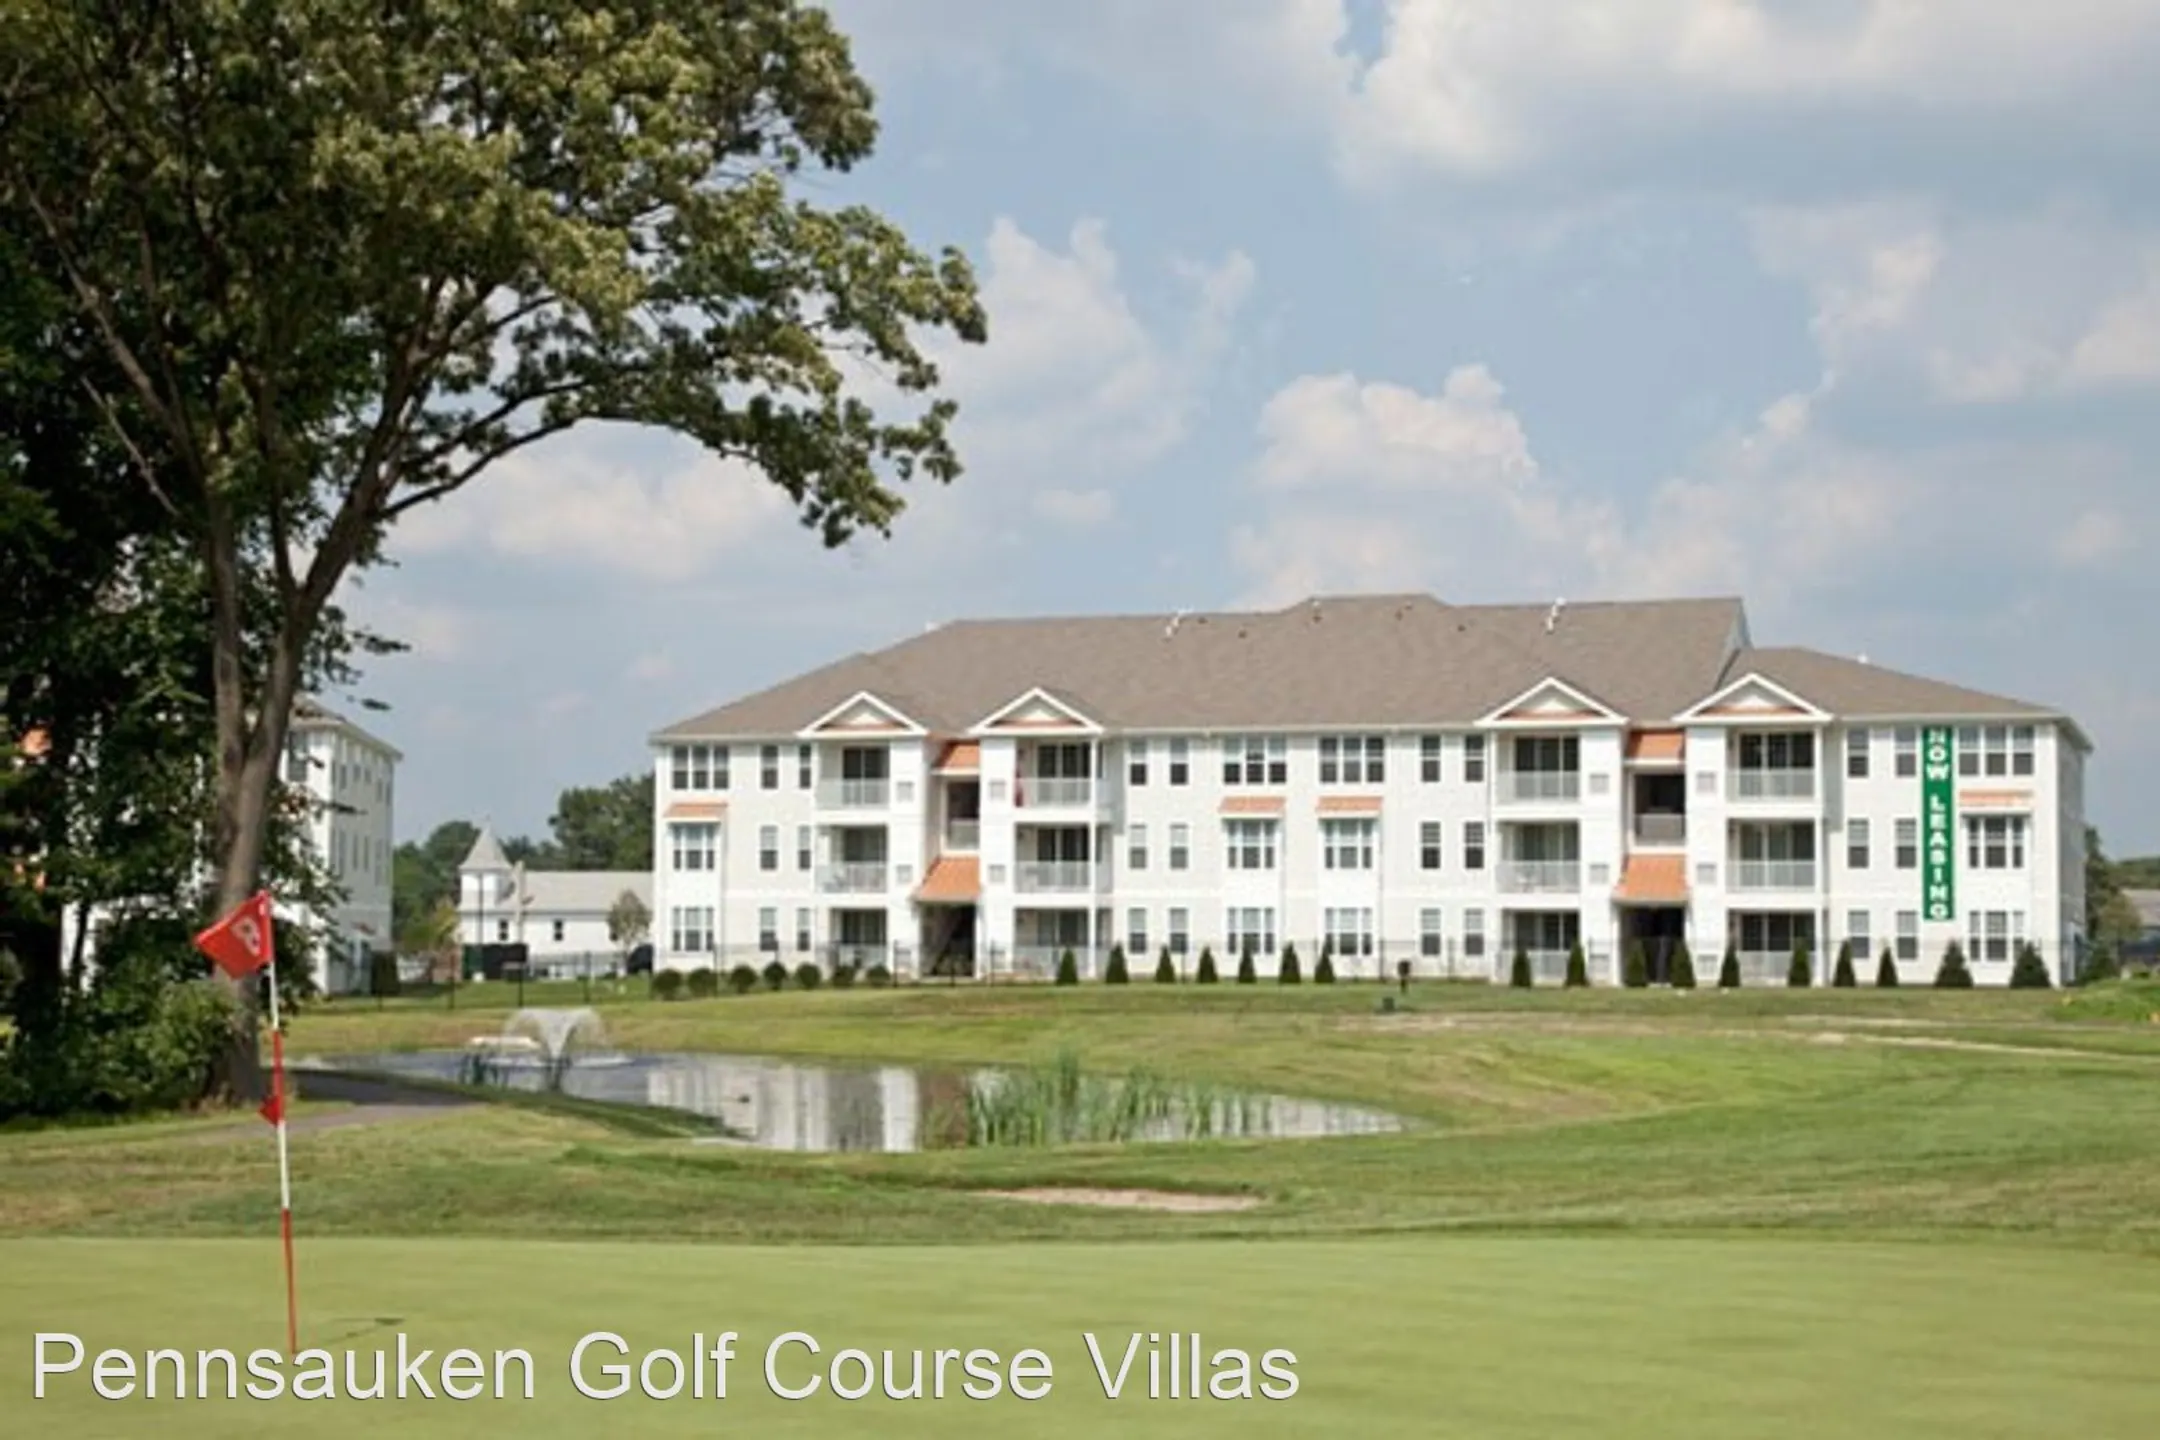 Building - Pennsauken Golf Course Villas - Pennsauken, NJ